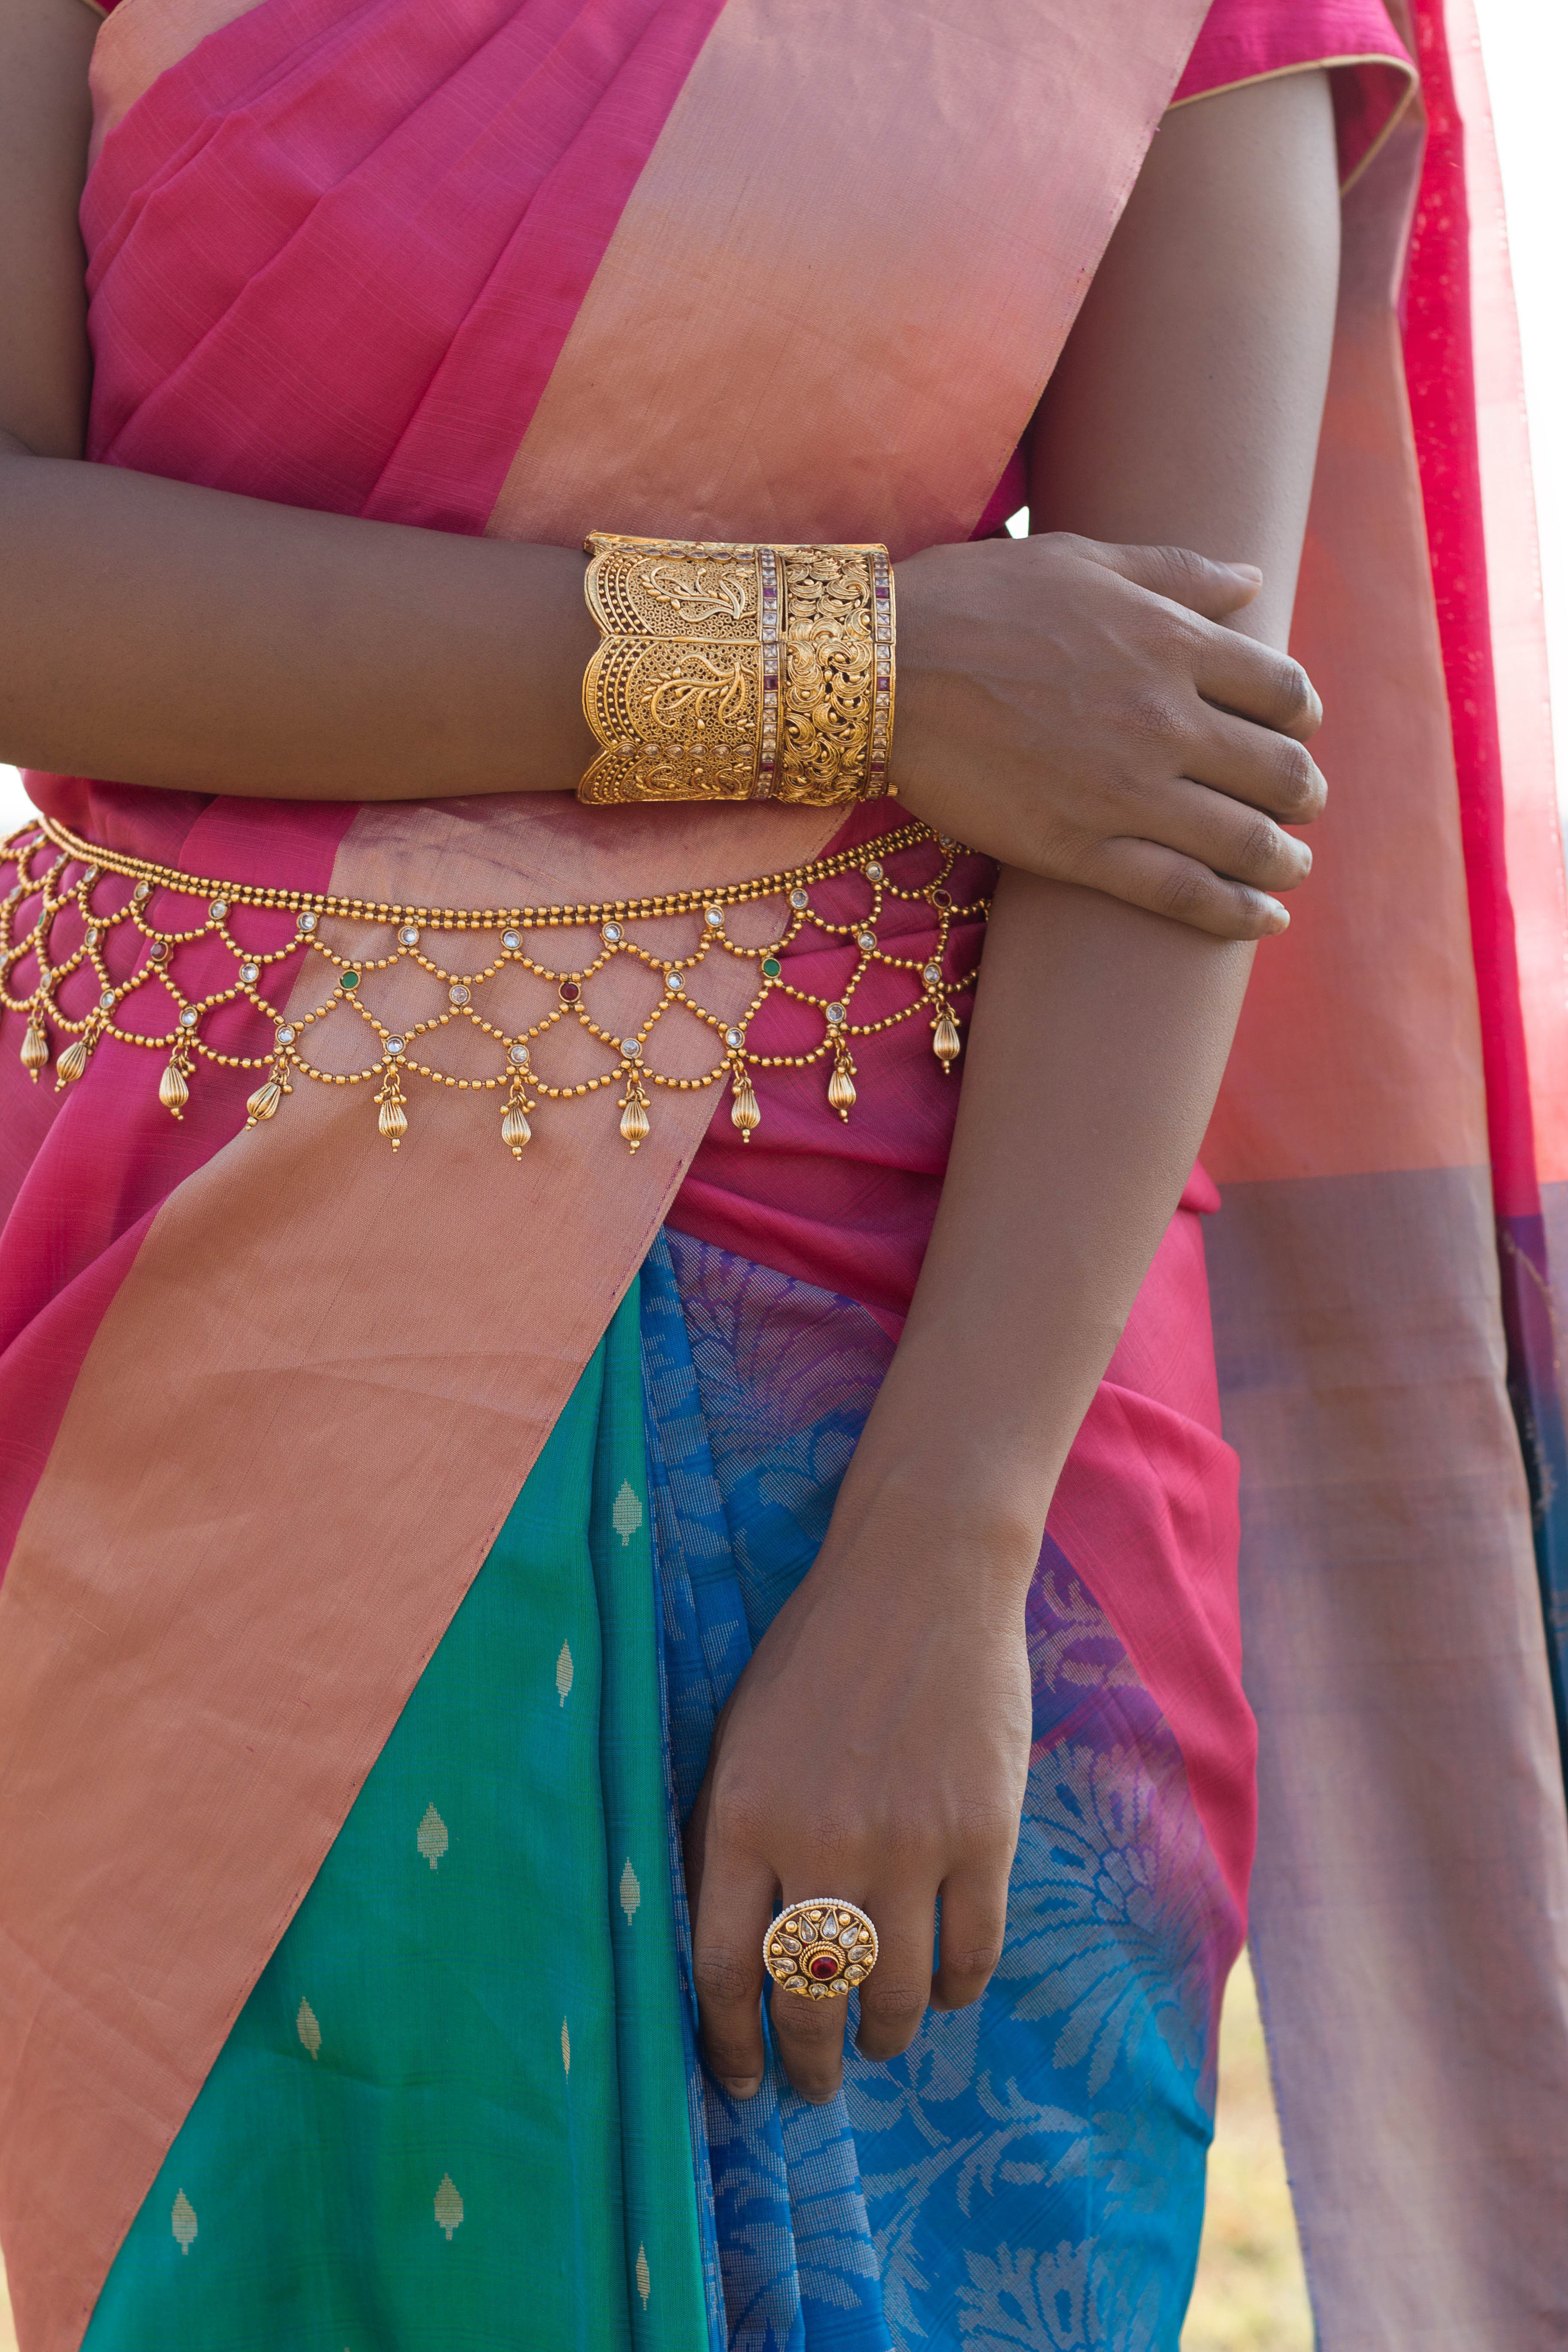 Indian Waist Chains - Saree Chains - Kandora Chains - Belly Chain